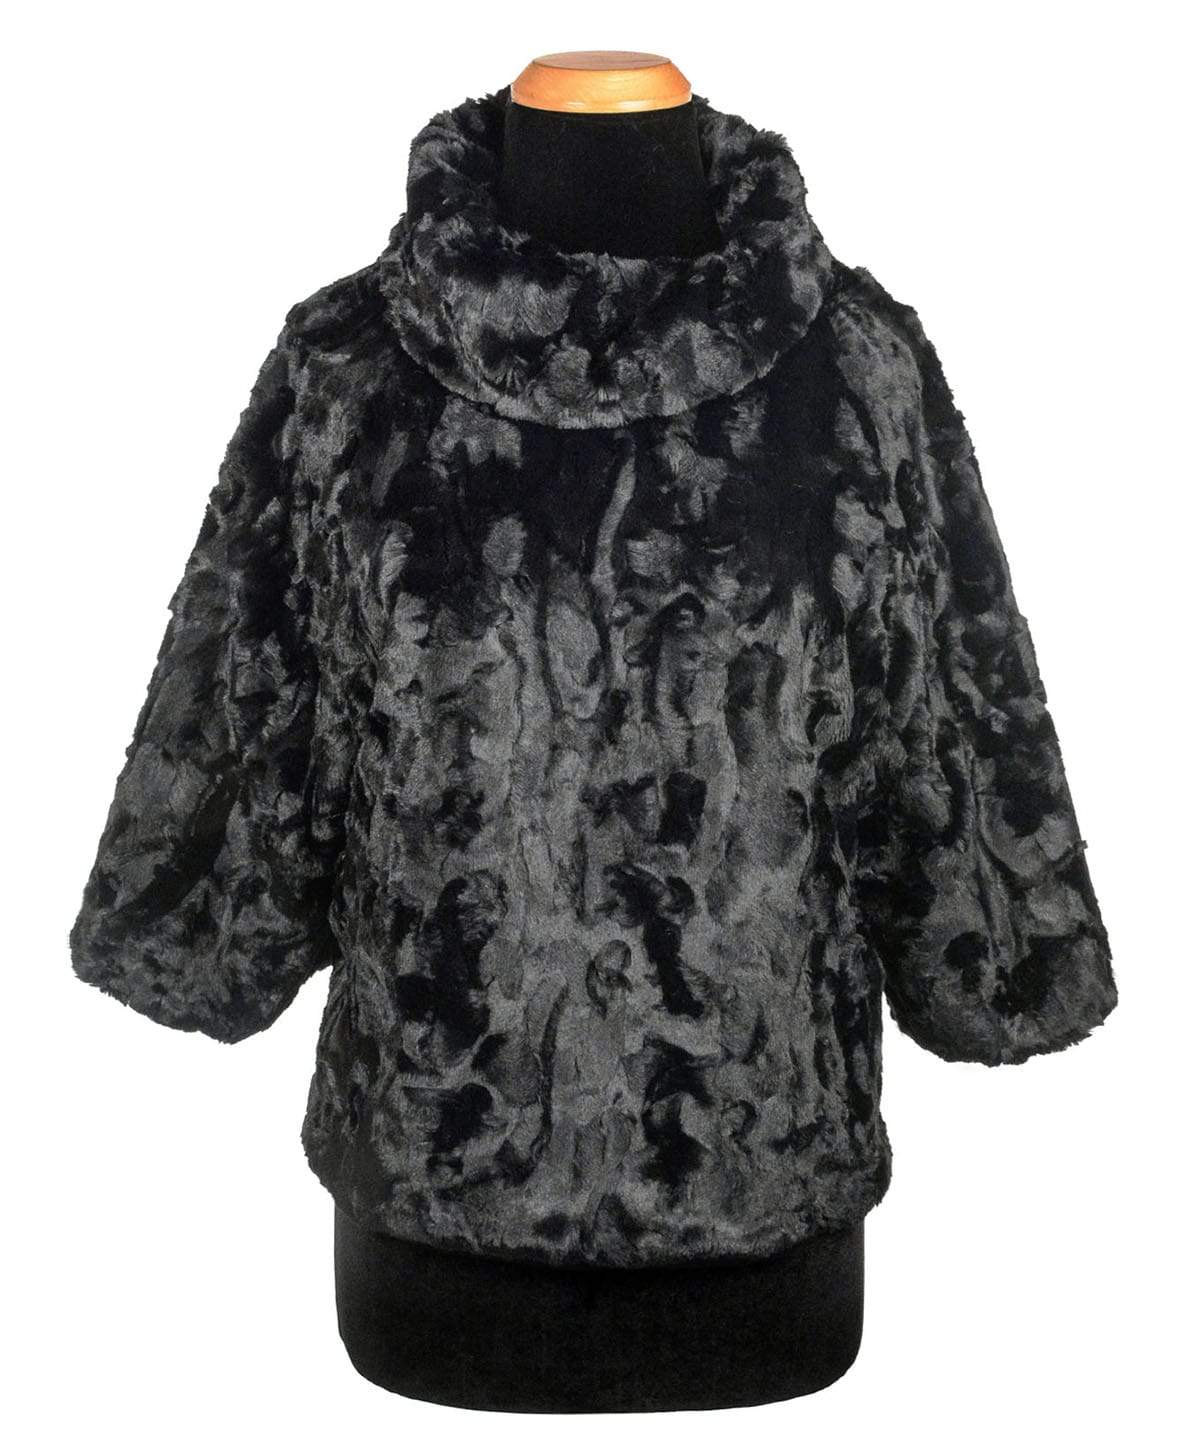 Pandemonium Millinery Sweater Top - Cuddly Faux Fur in Black Small / Medium / Black / Add 4" Outerwear